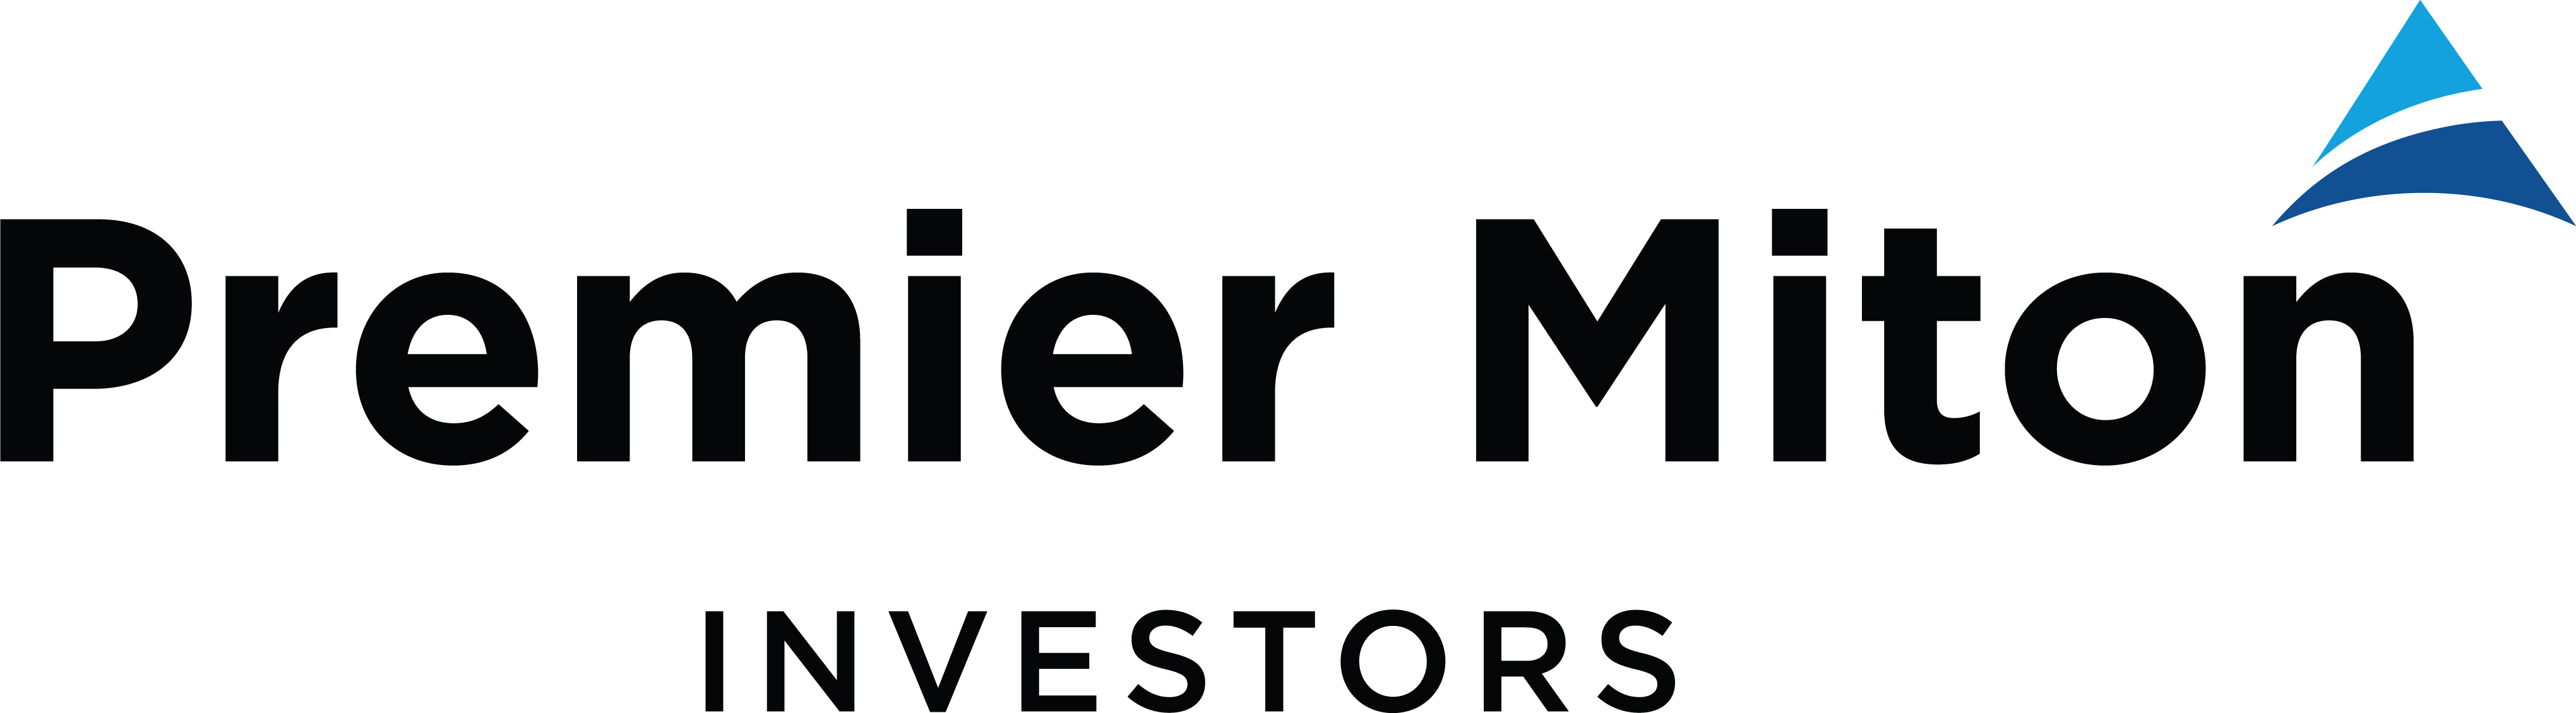 Premier Miton Investors logo